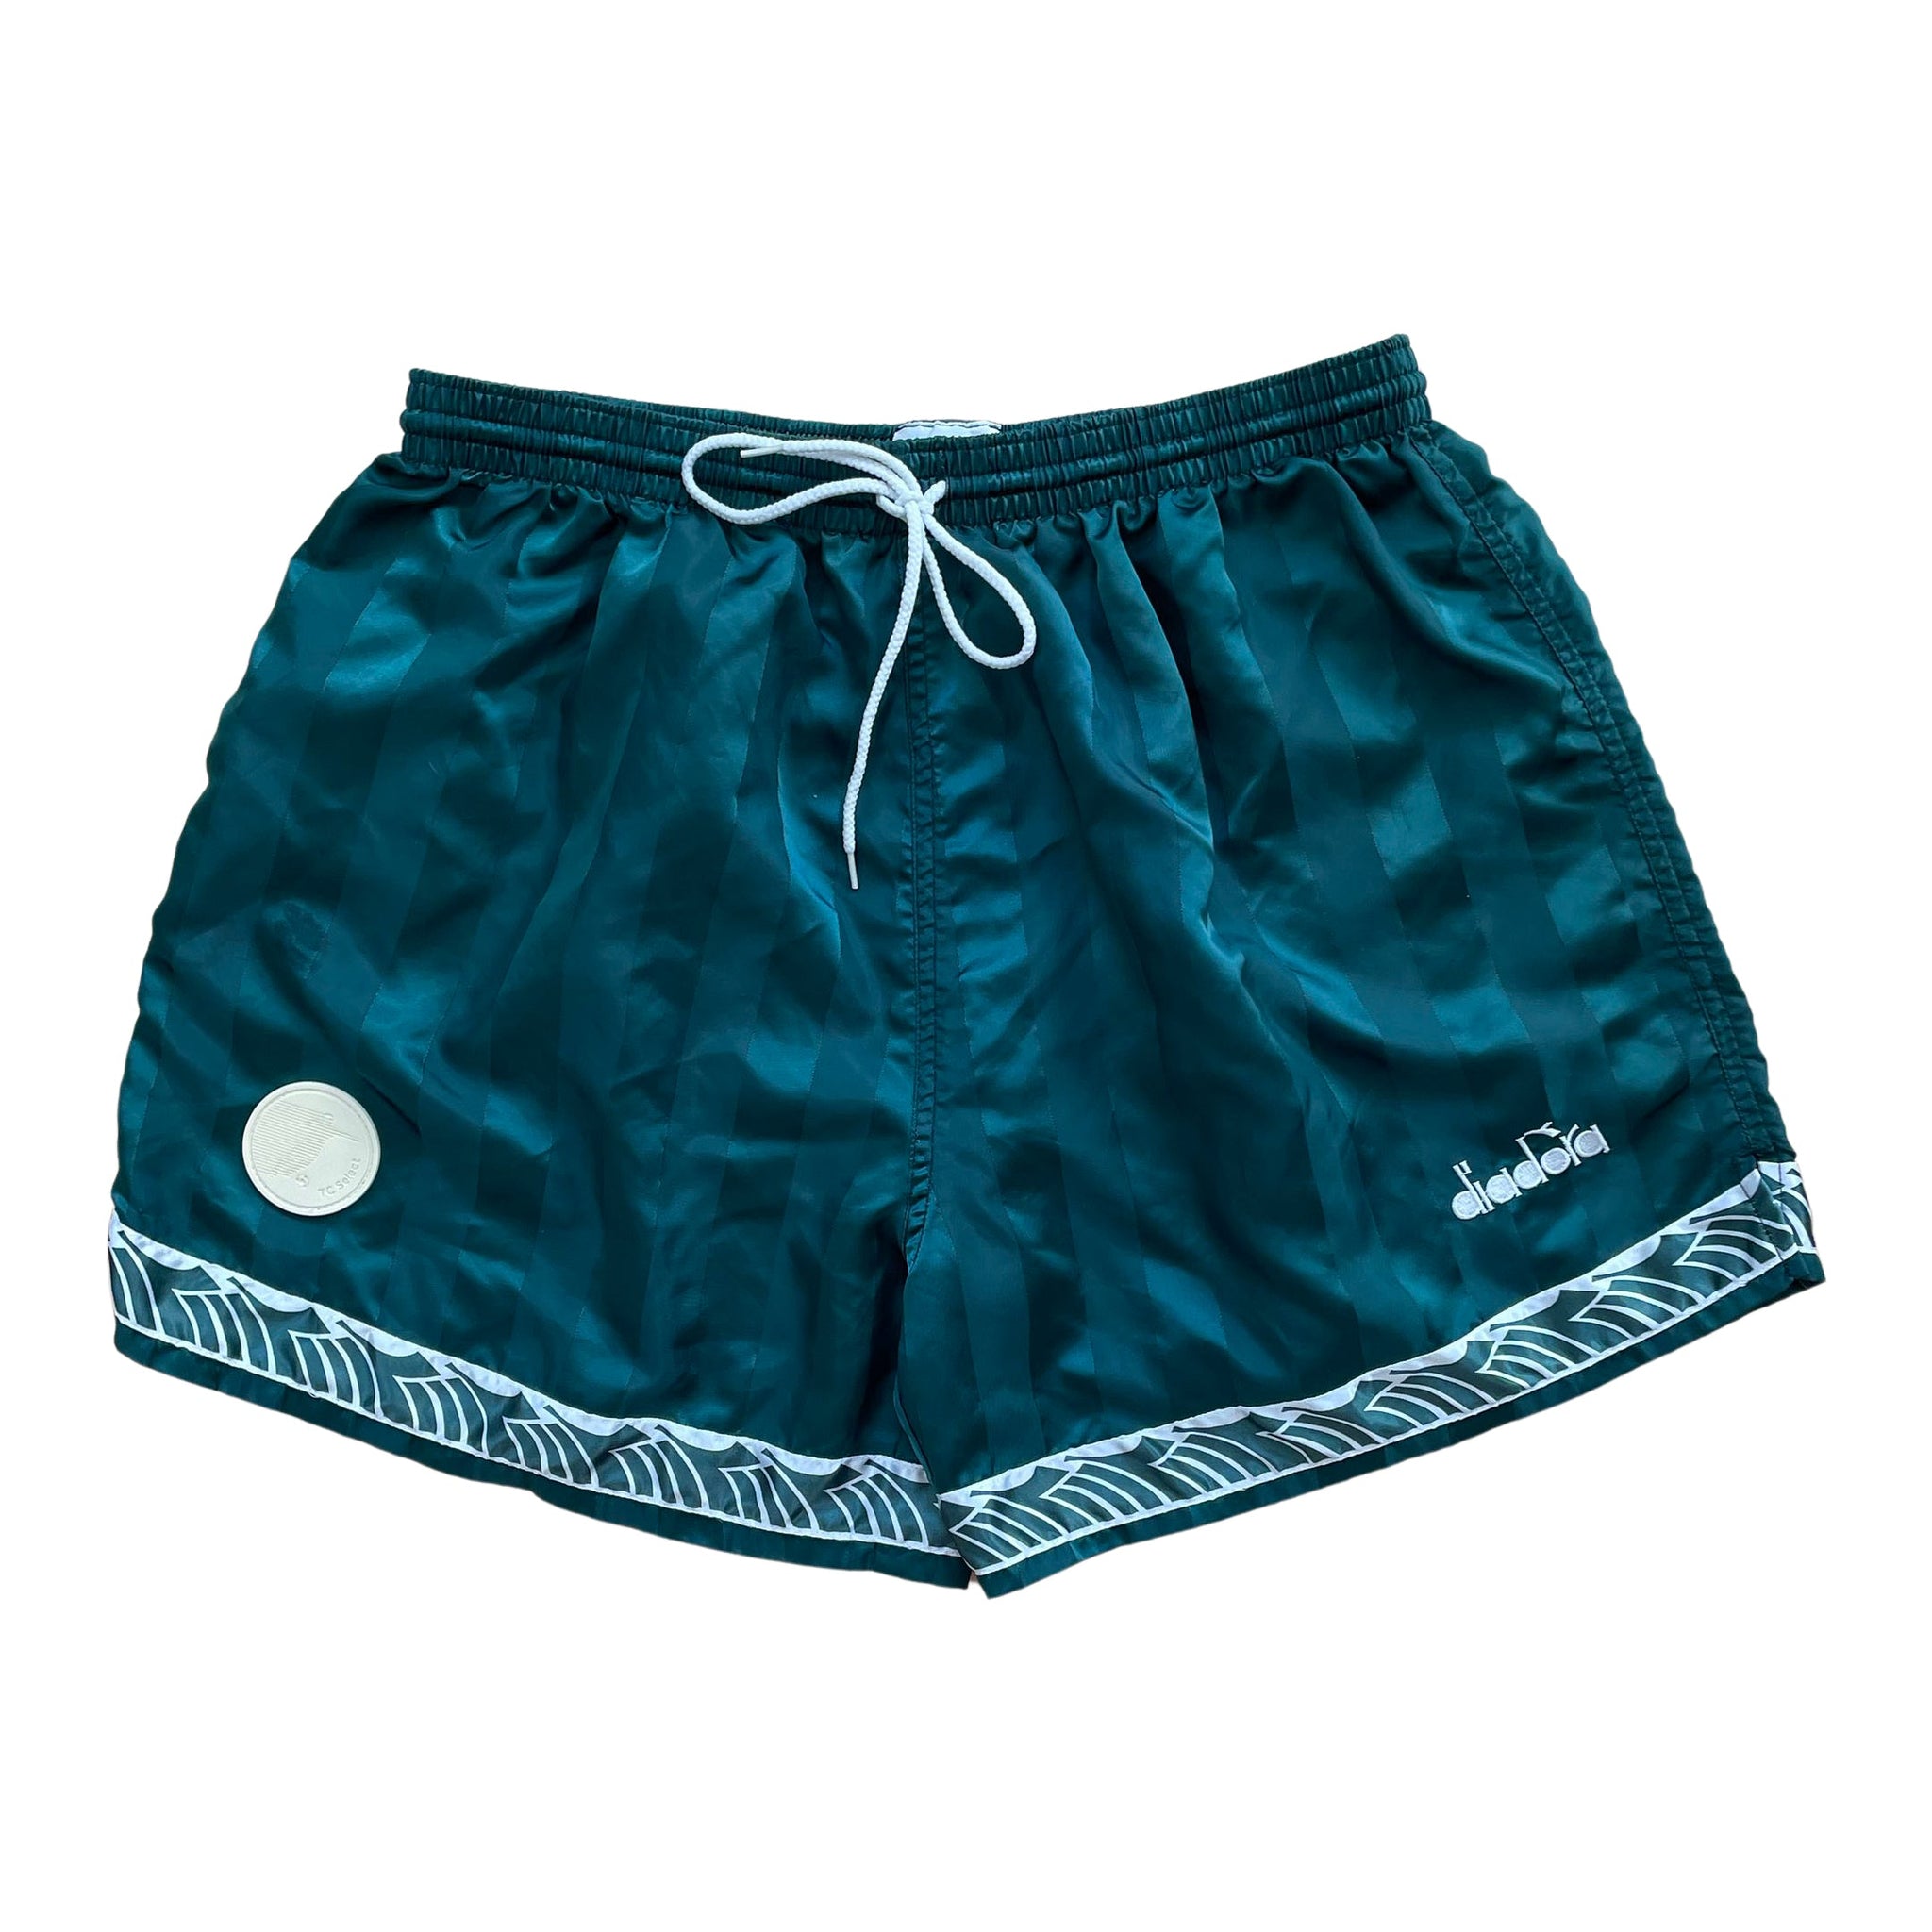 Diadora Nylon Shorts - L